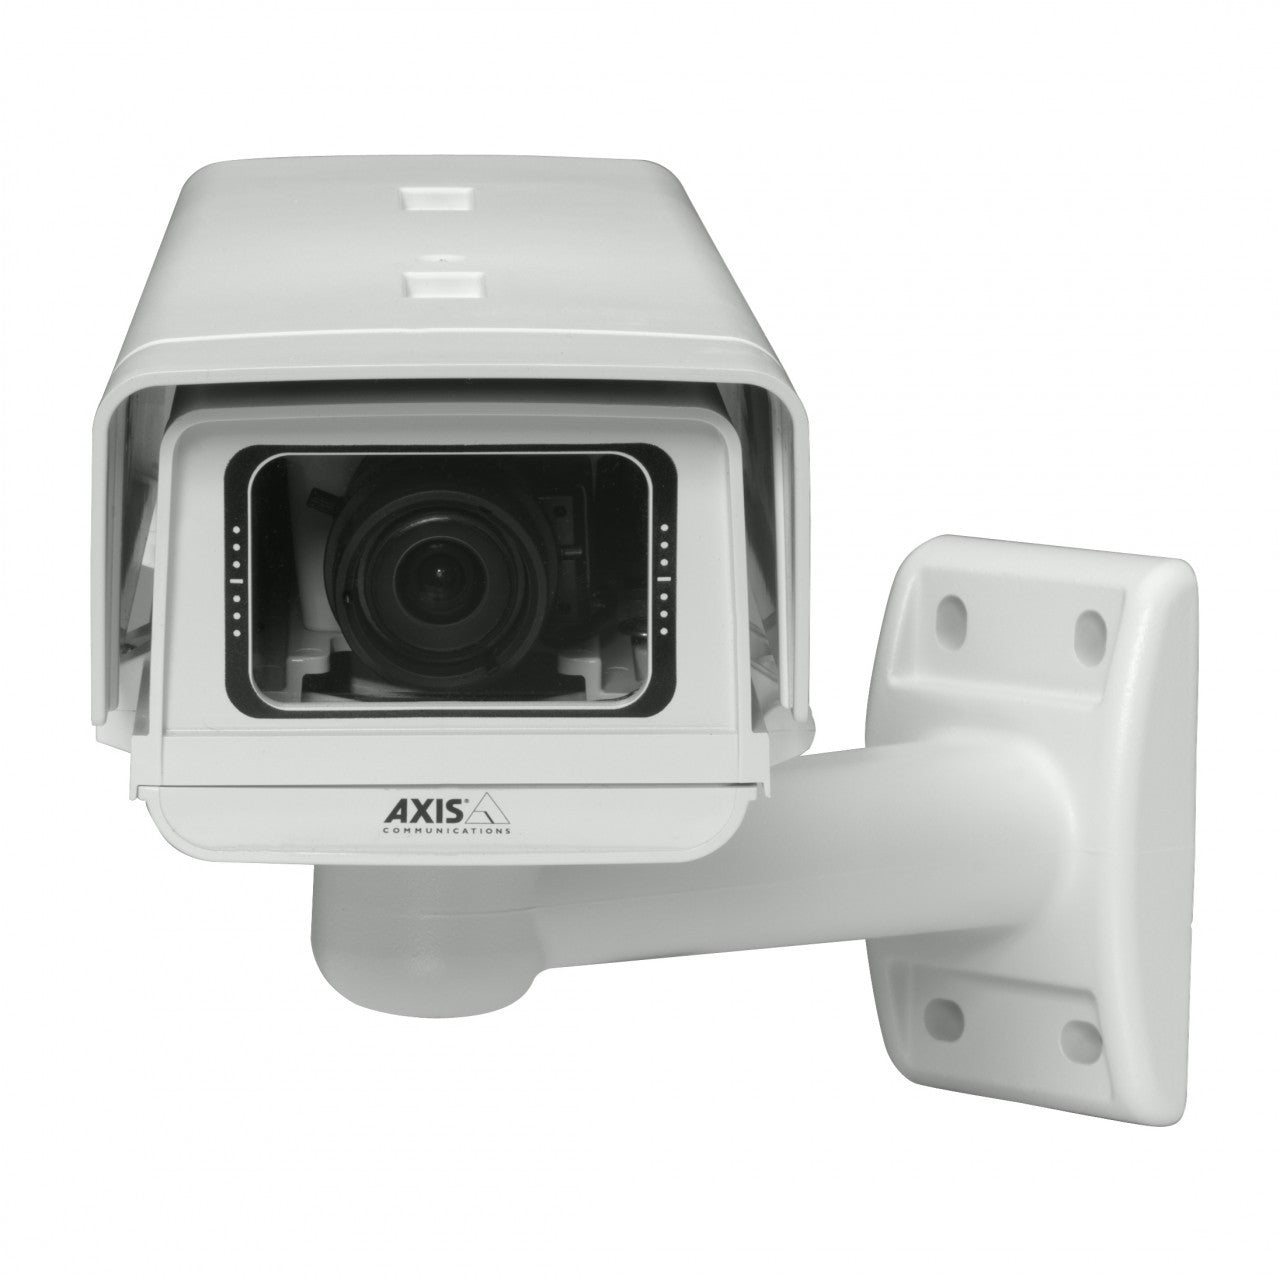 AXIS M1114-E (0342-001) HD Network IP Camera